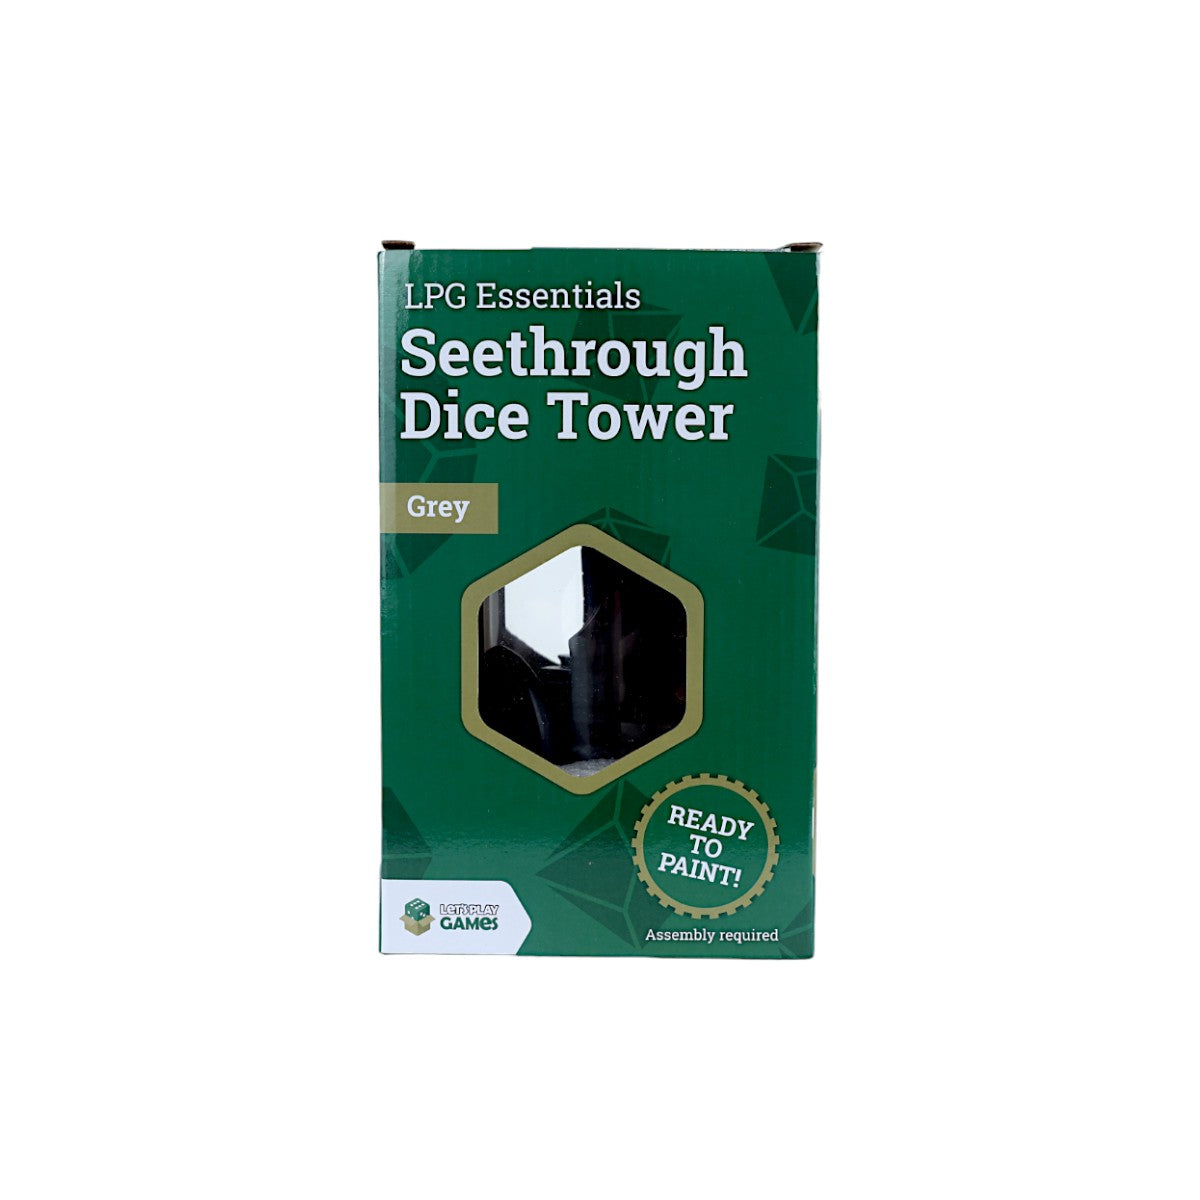 LPG Seethrough Dice Tower - Grey